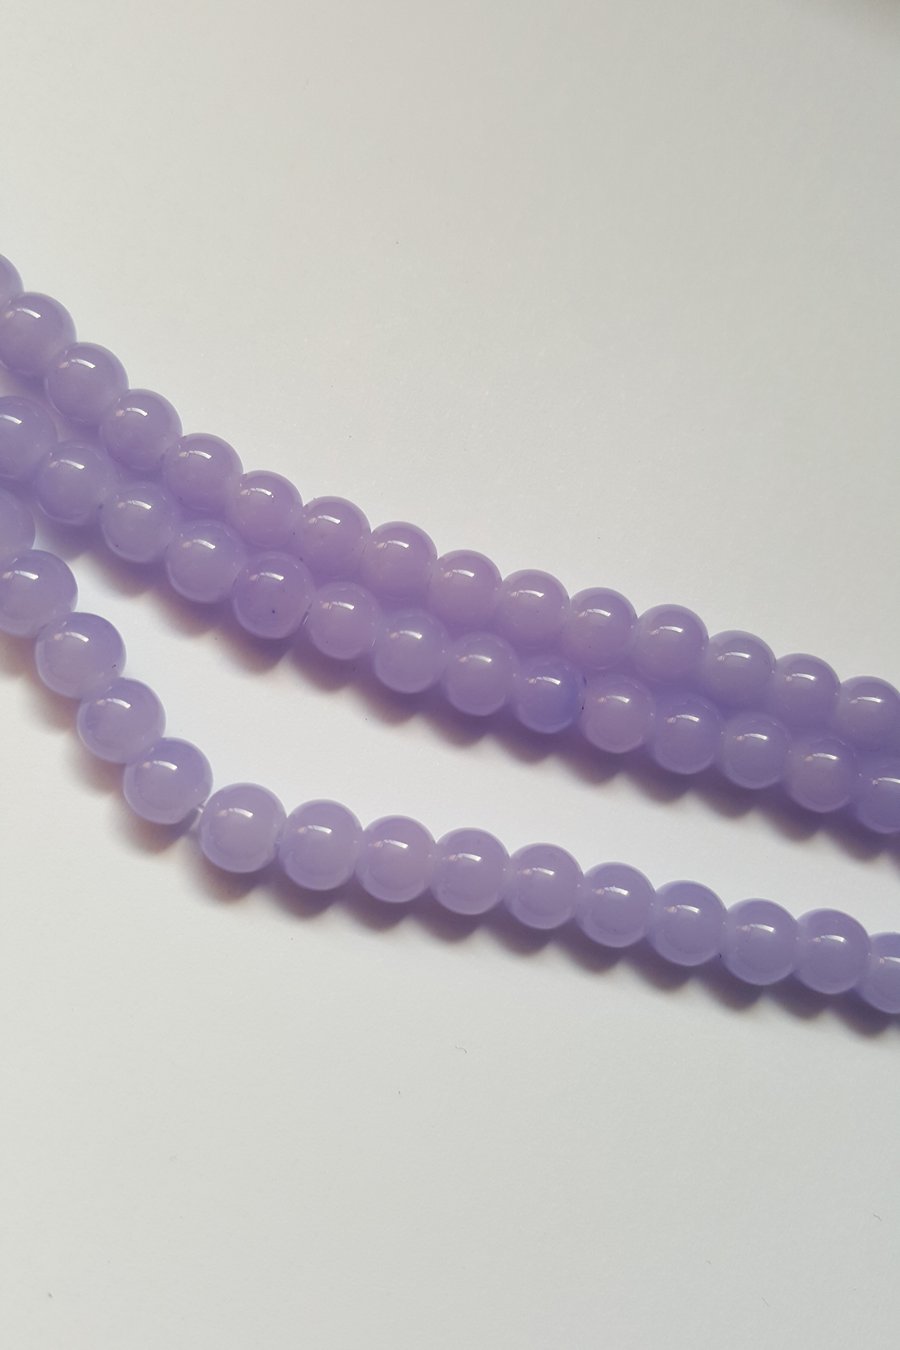 50 x Imitation Jade Glass Beads - Round - 6mm - Lavender 